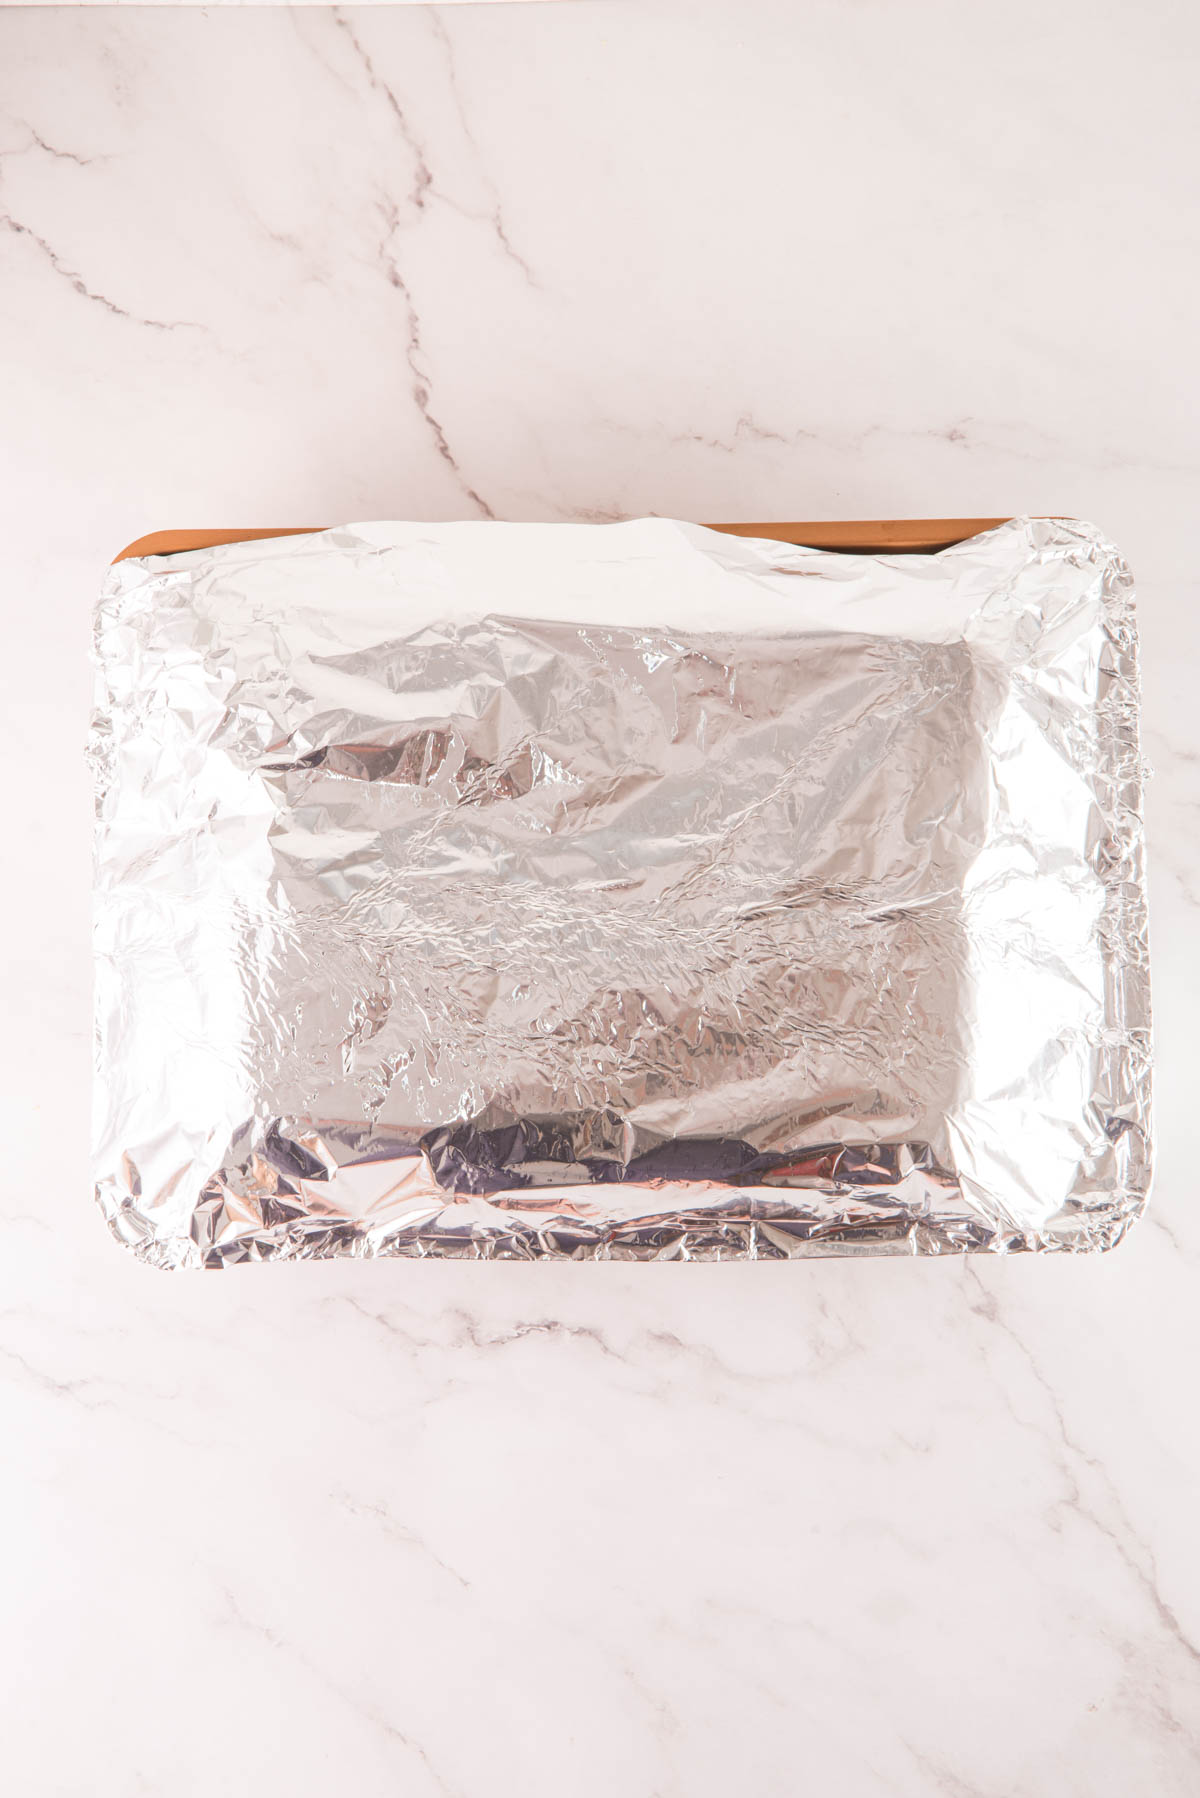 Aluminum foil covering a pan